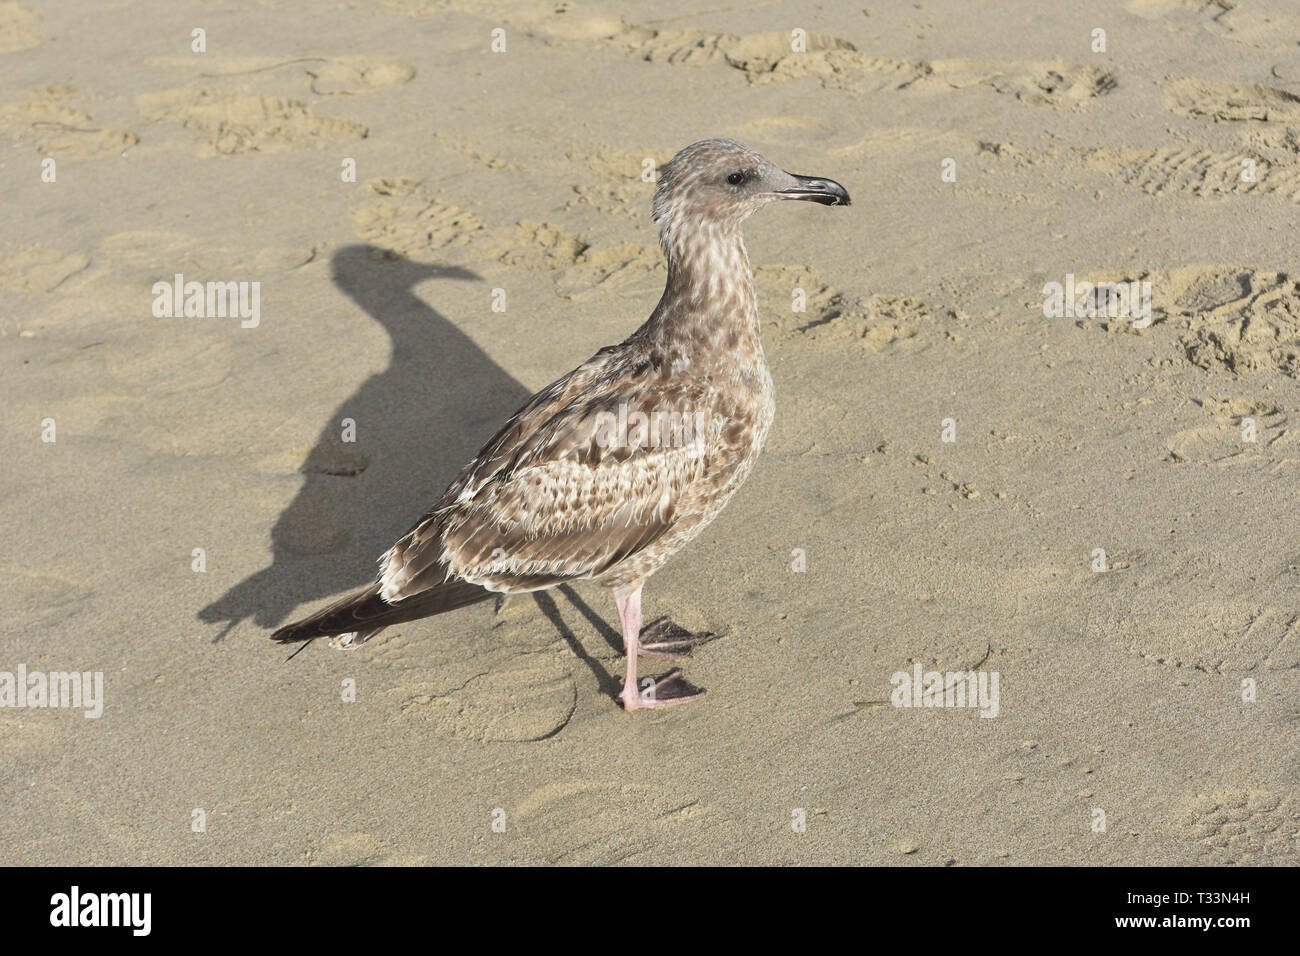 Pretty gray seagull walking around the sandy beach Stock Photo